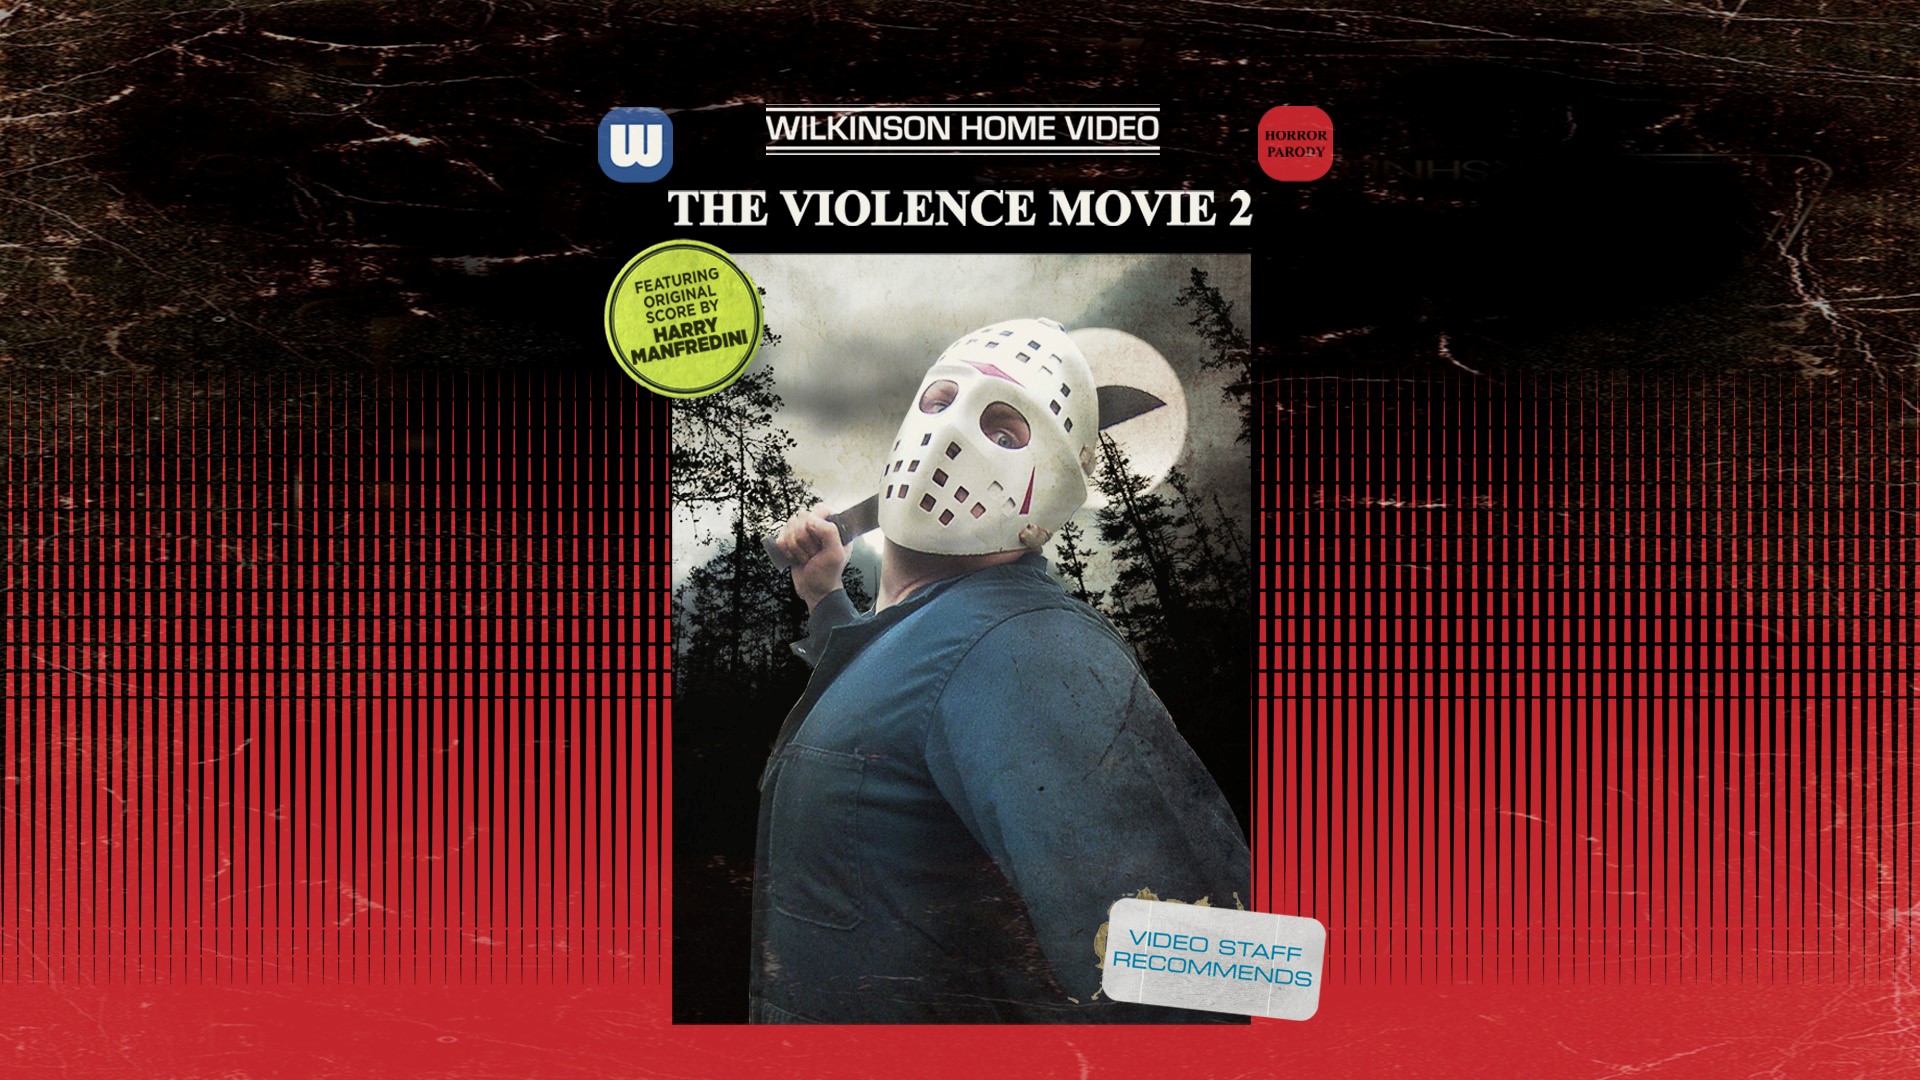 The Violence Movie 2